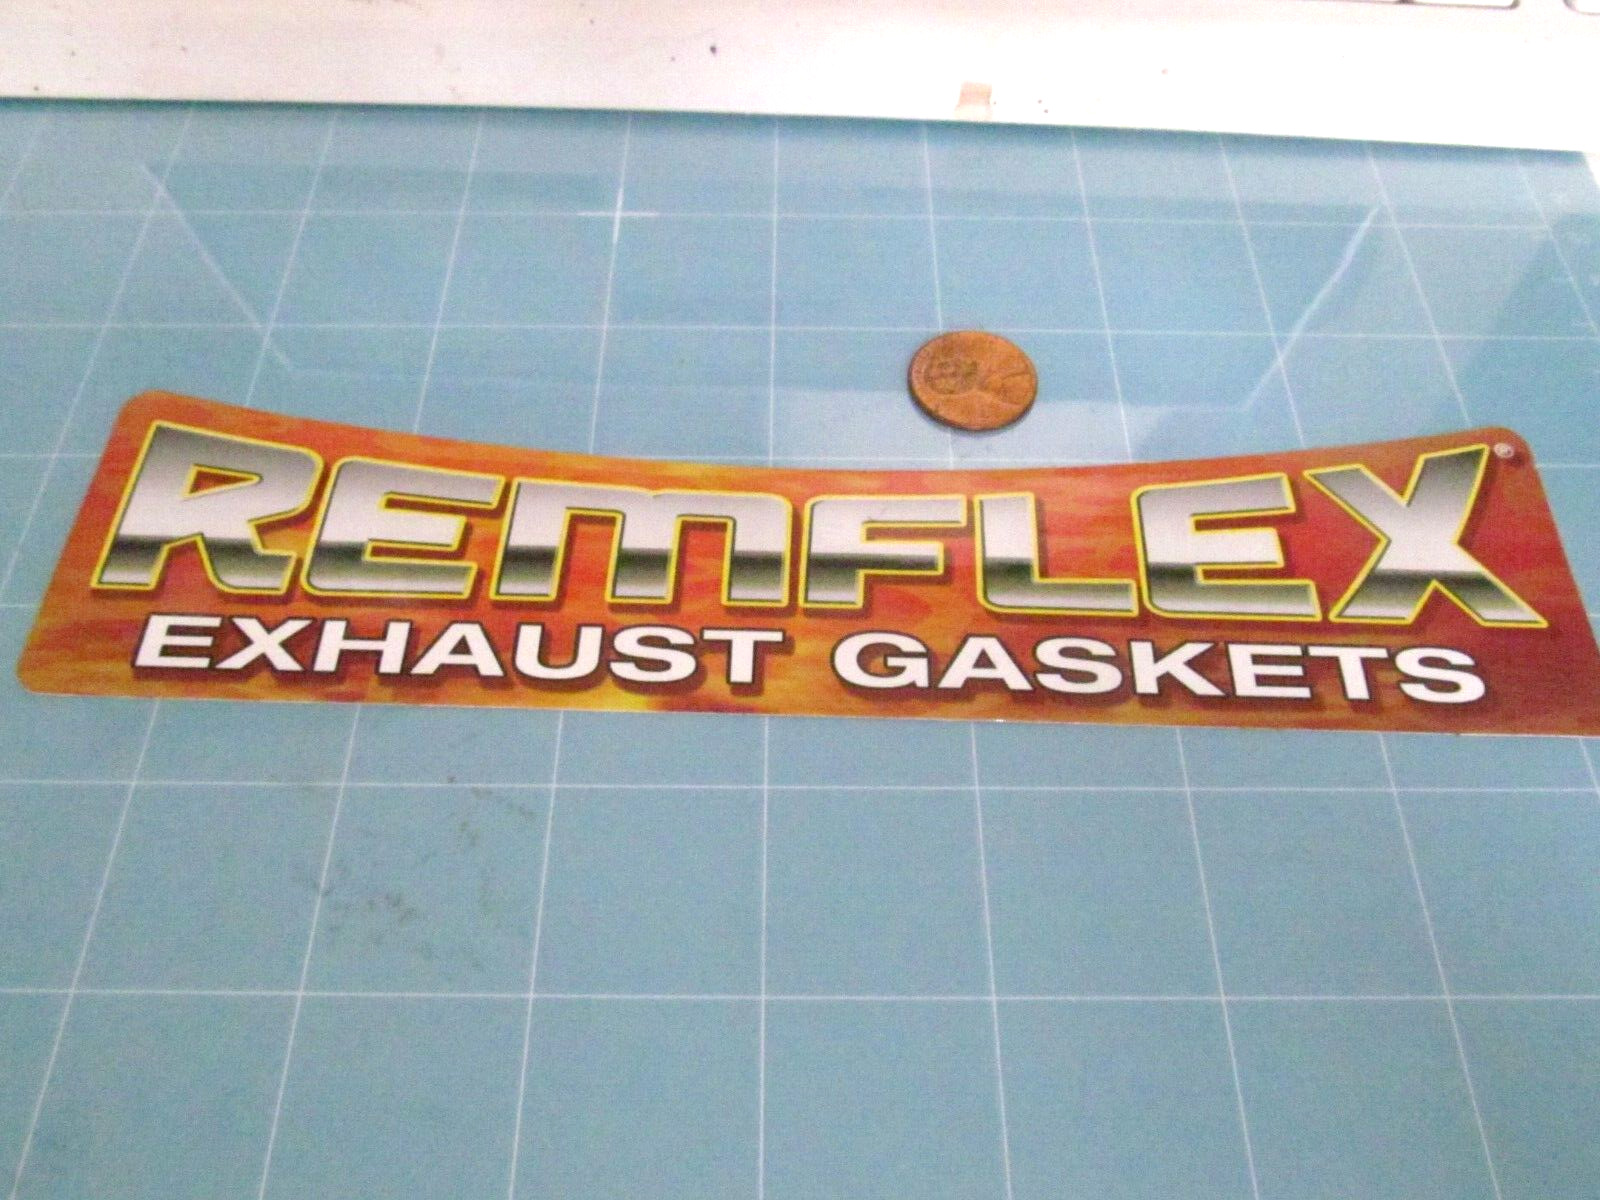 EXHAUST GASKETS REMFLEX Sticker / Decal  ORIGINAL OLD STOCK